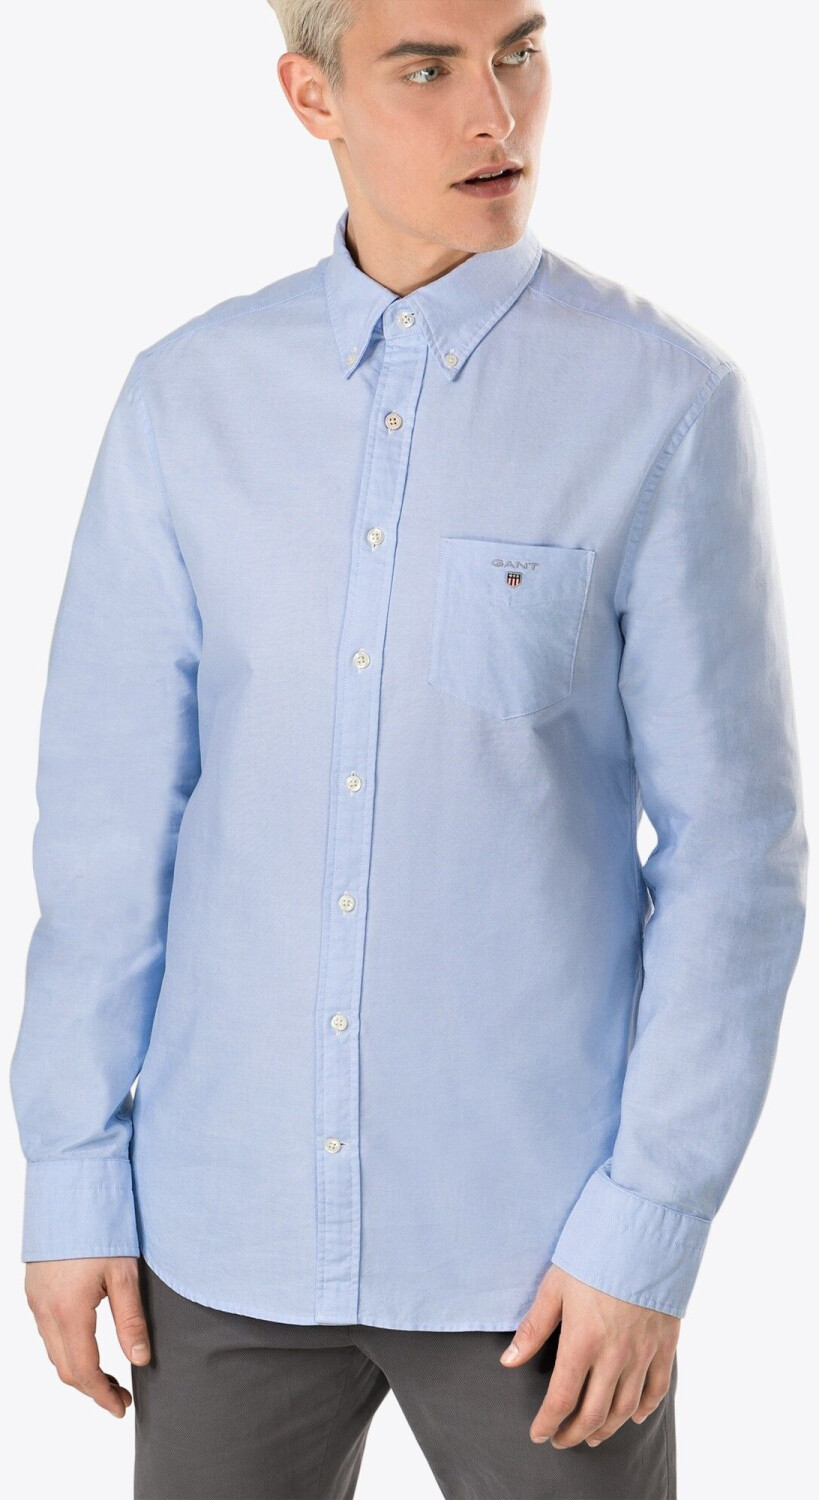 GANT Oxford Hemd capri blue (3046000-468) ab € 65,70 | Preisvergleich bei